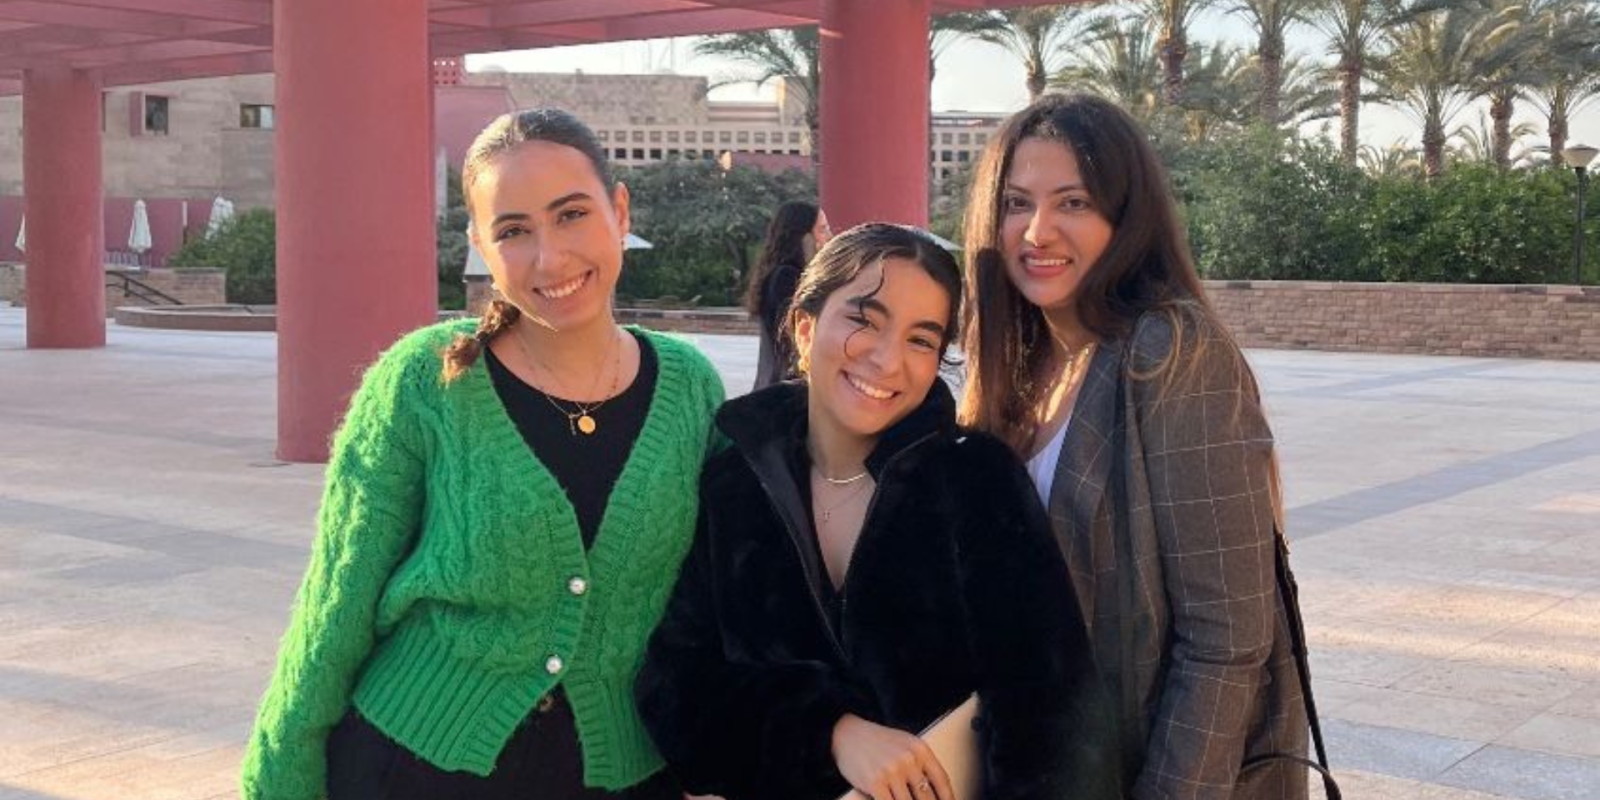 Three women smile on campus